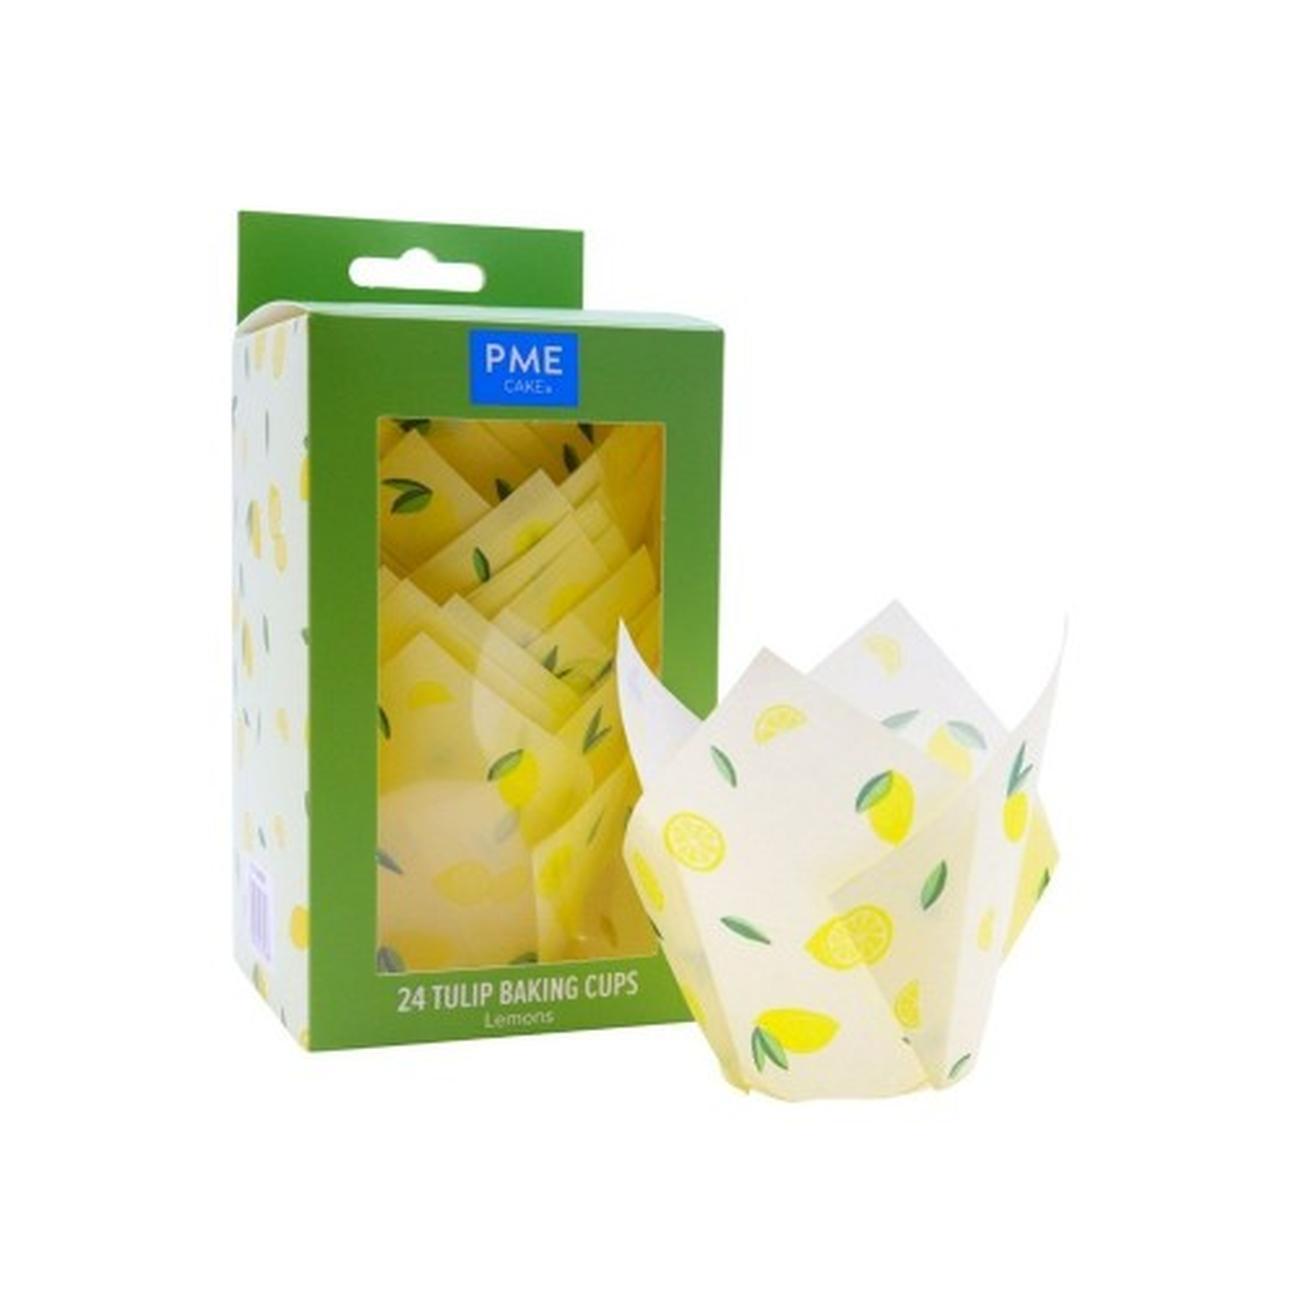 pme-24-lemon-tulip-muffin-cases - PME 24 Lemon Tulip Muffin Cases